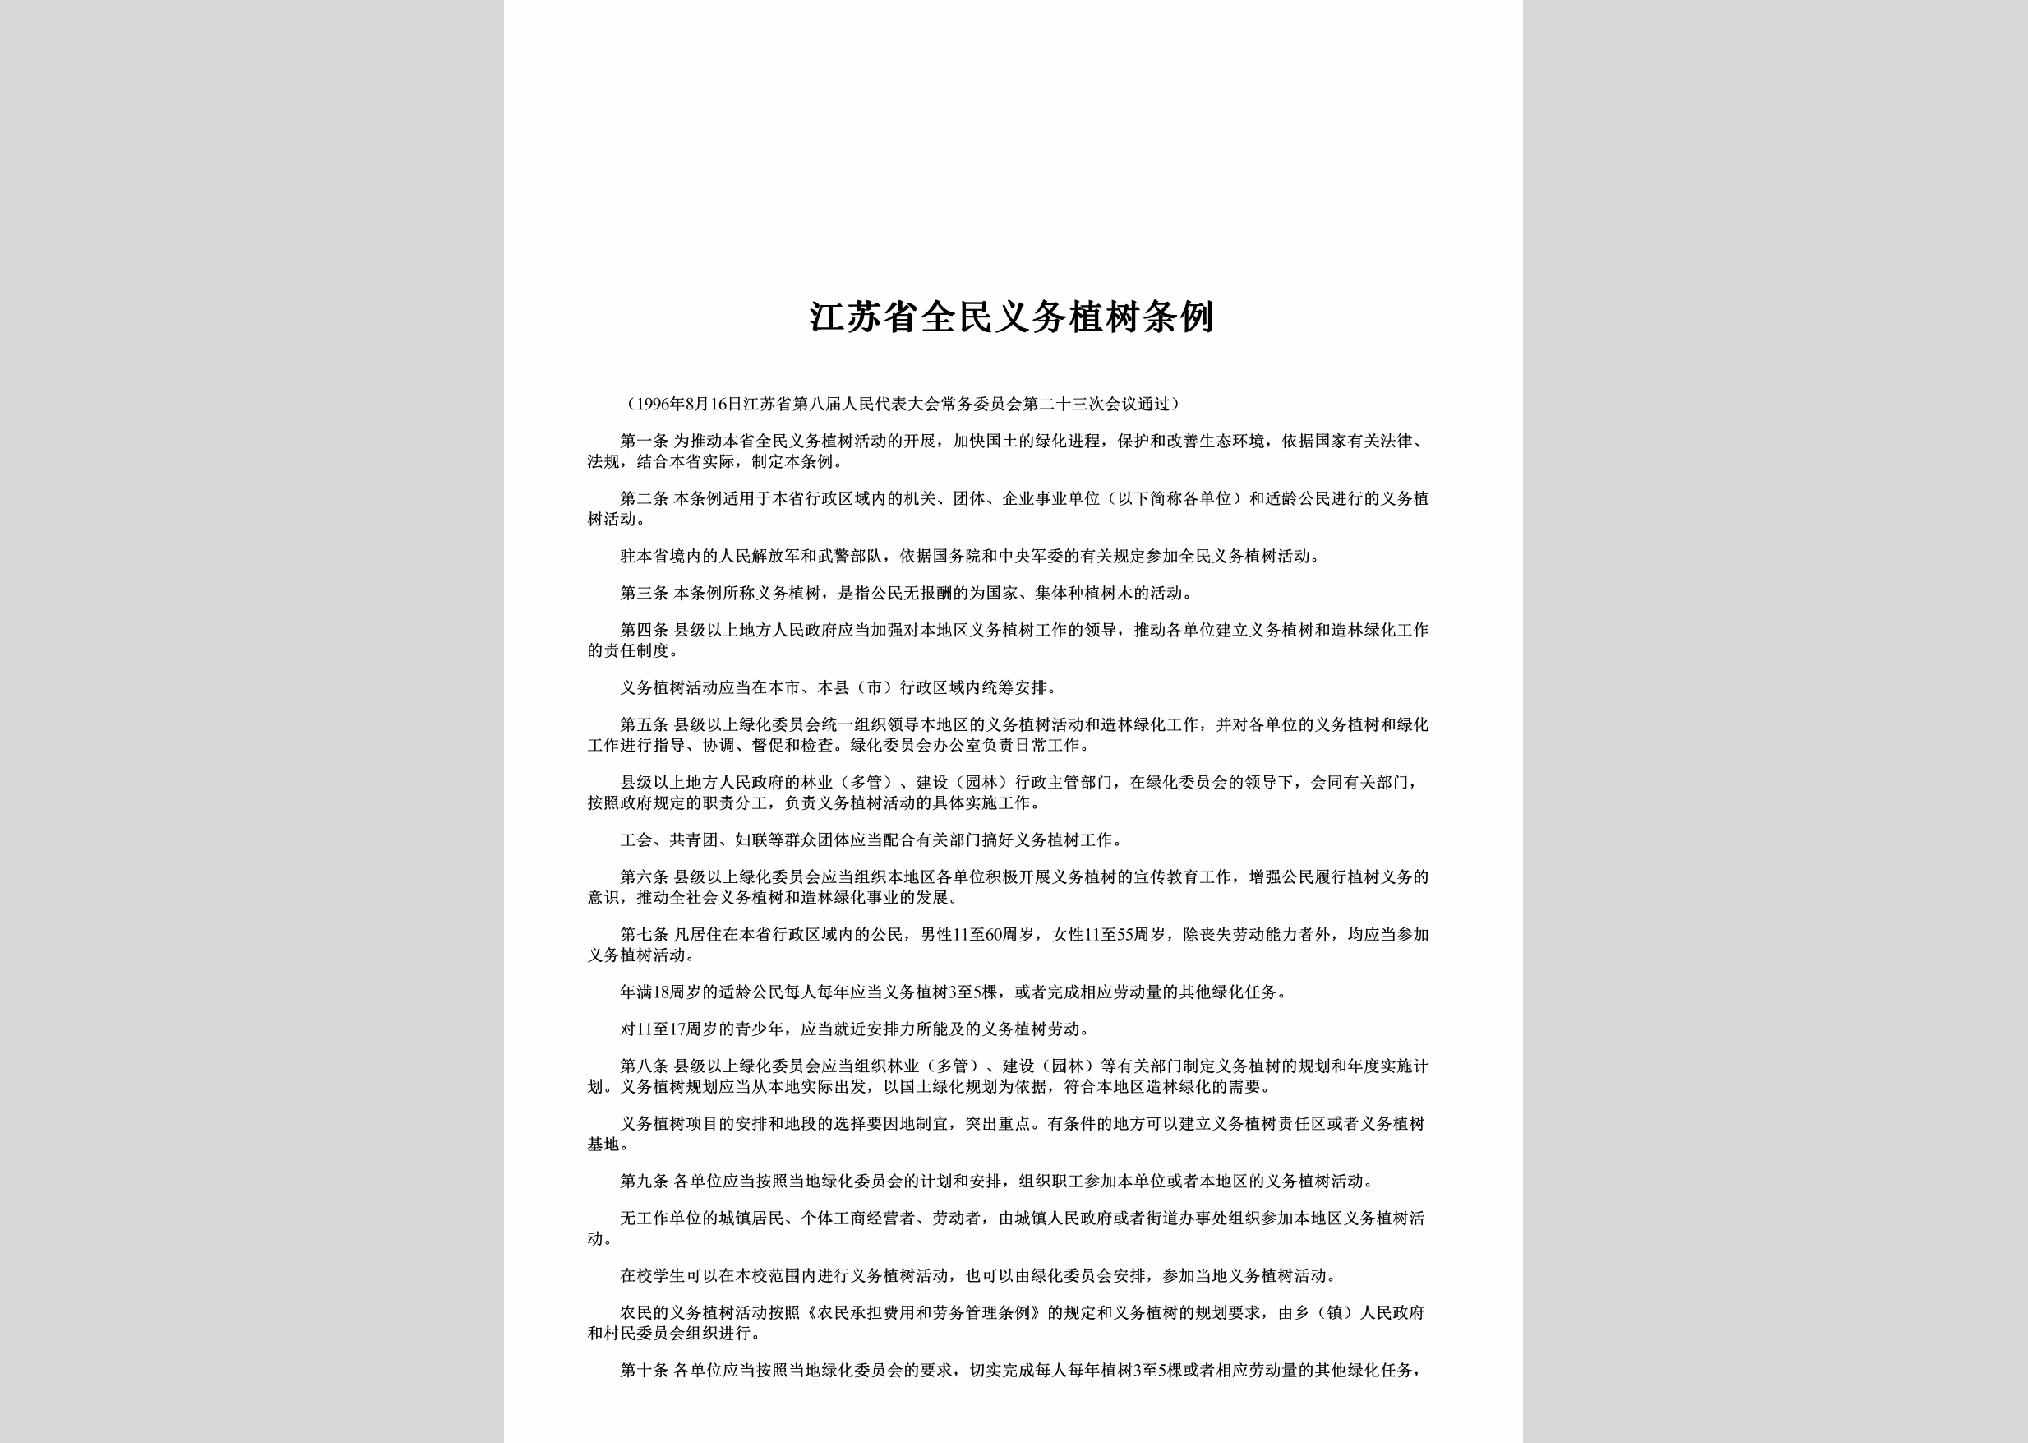 JS-QMYWZSTL-1996：江苏省全民义务植树条例